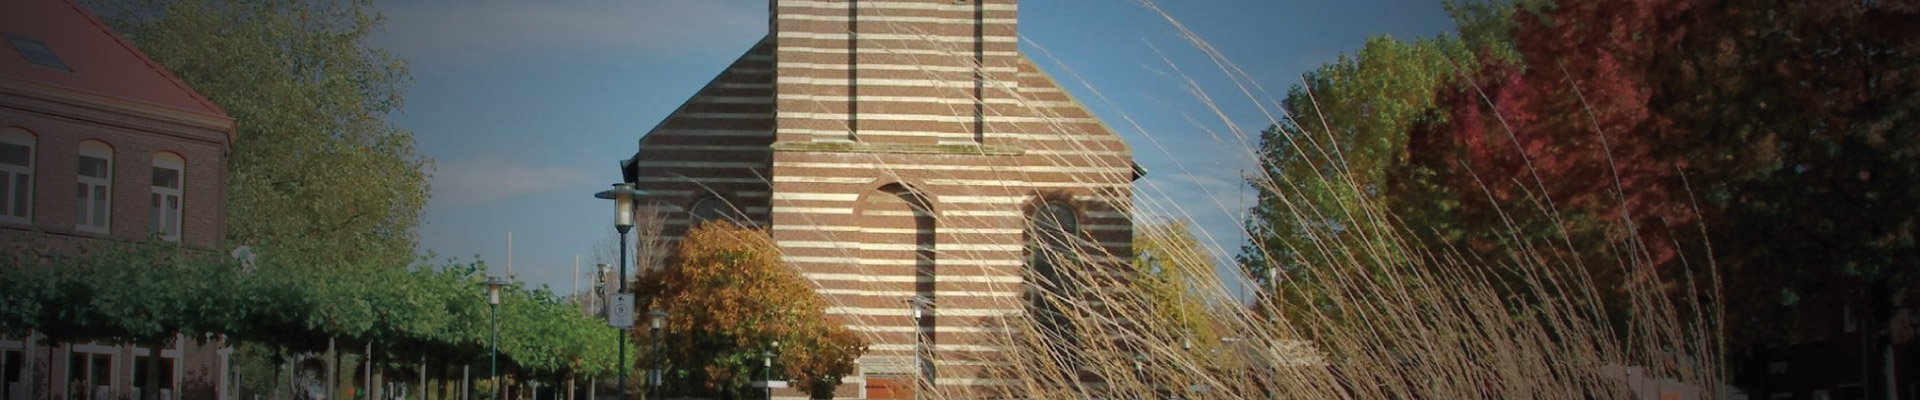 Sint Nicolaas Kerk - Parochie Meijel